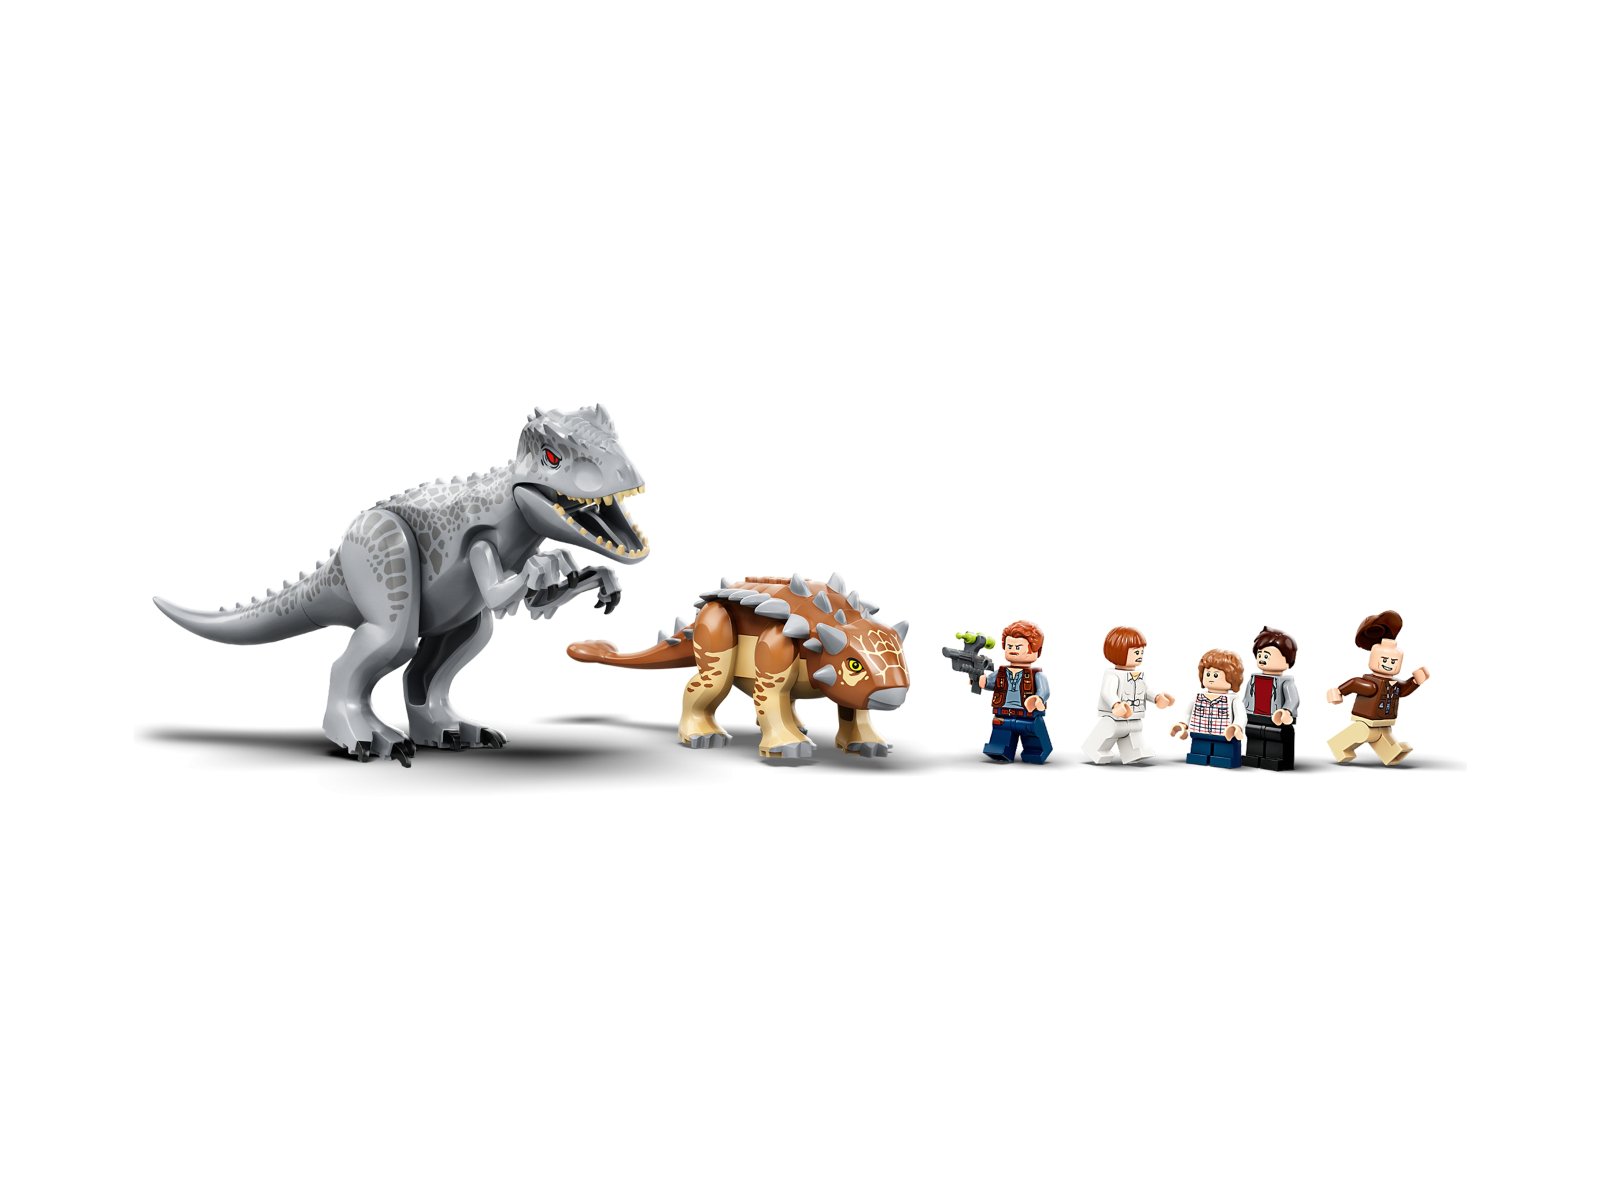 LEGO 75941 Indominus Rex kontra ankylozaur